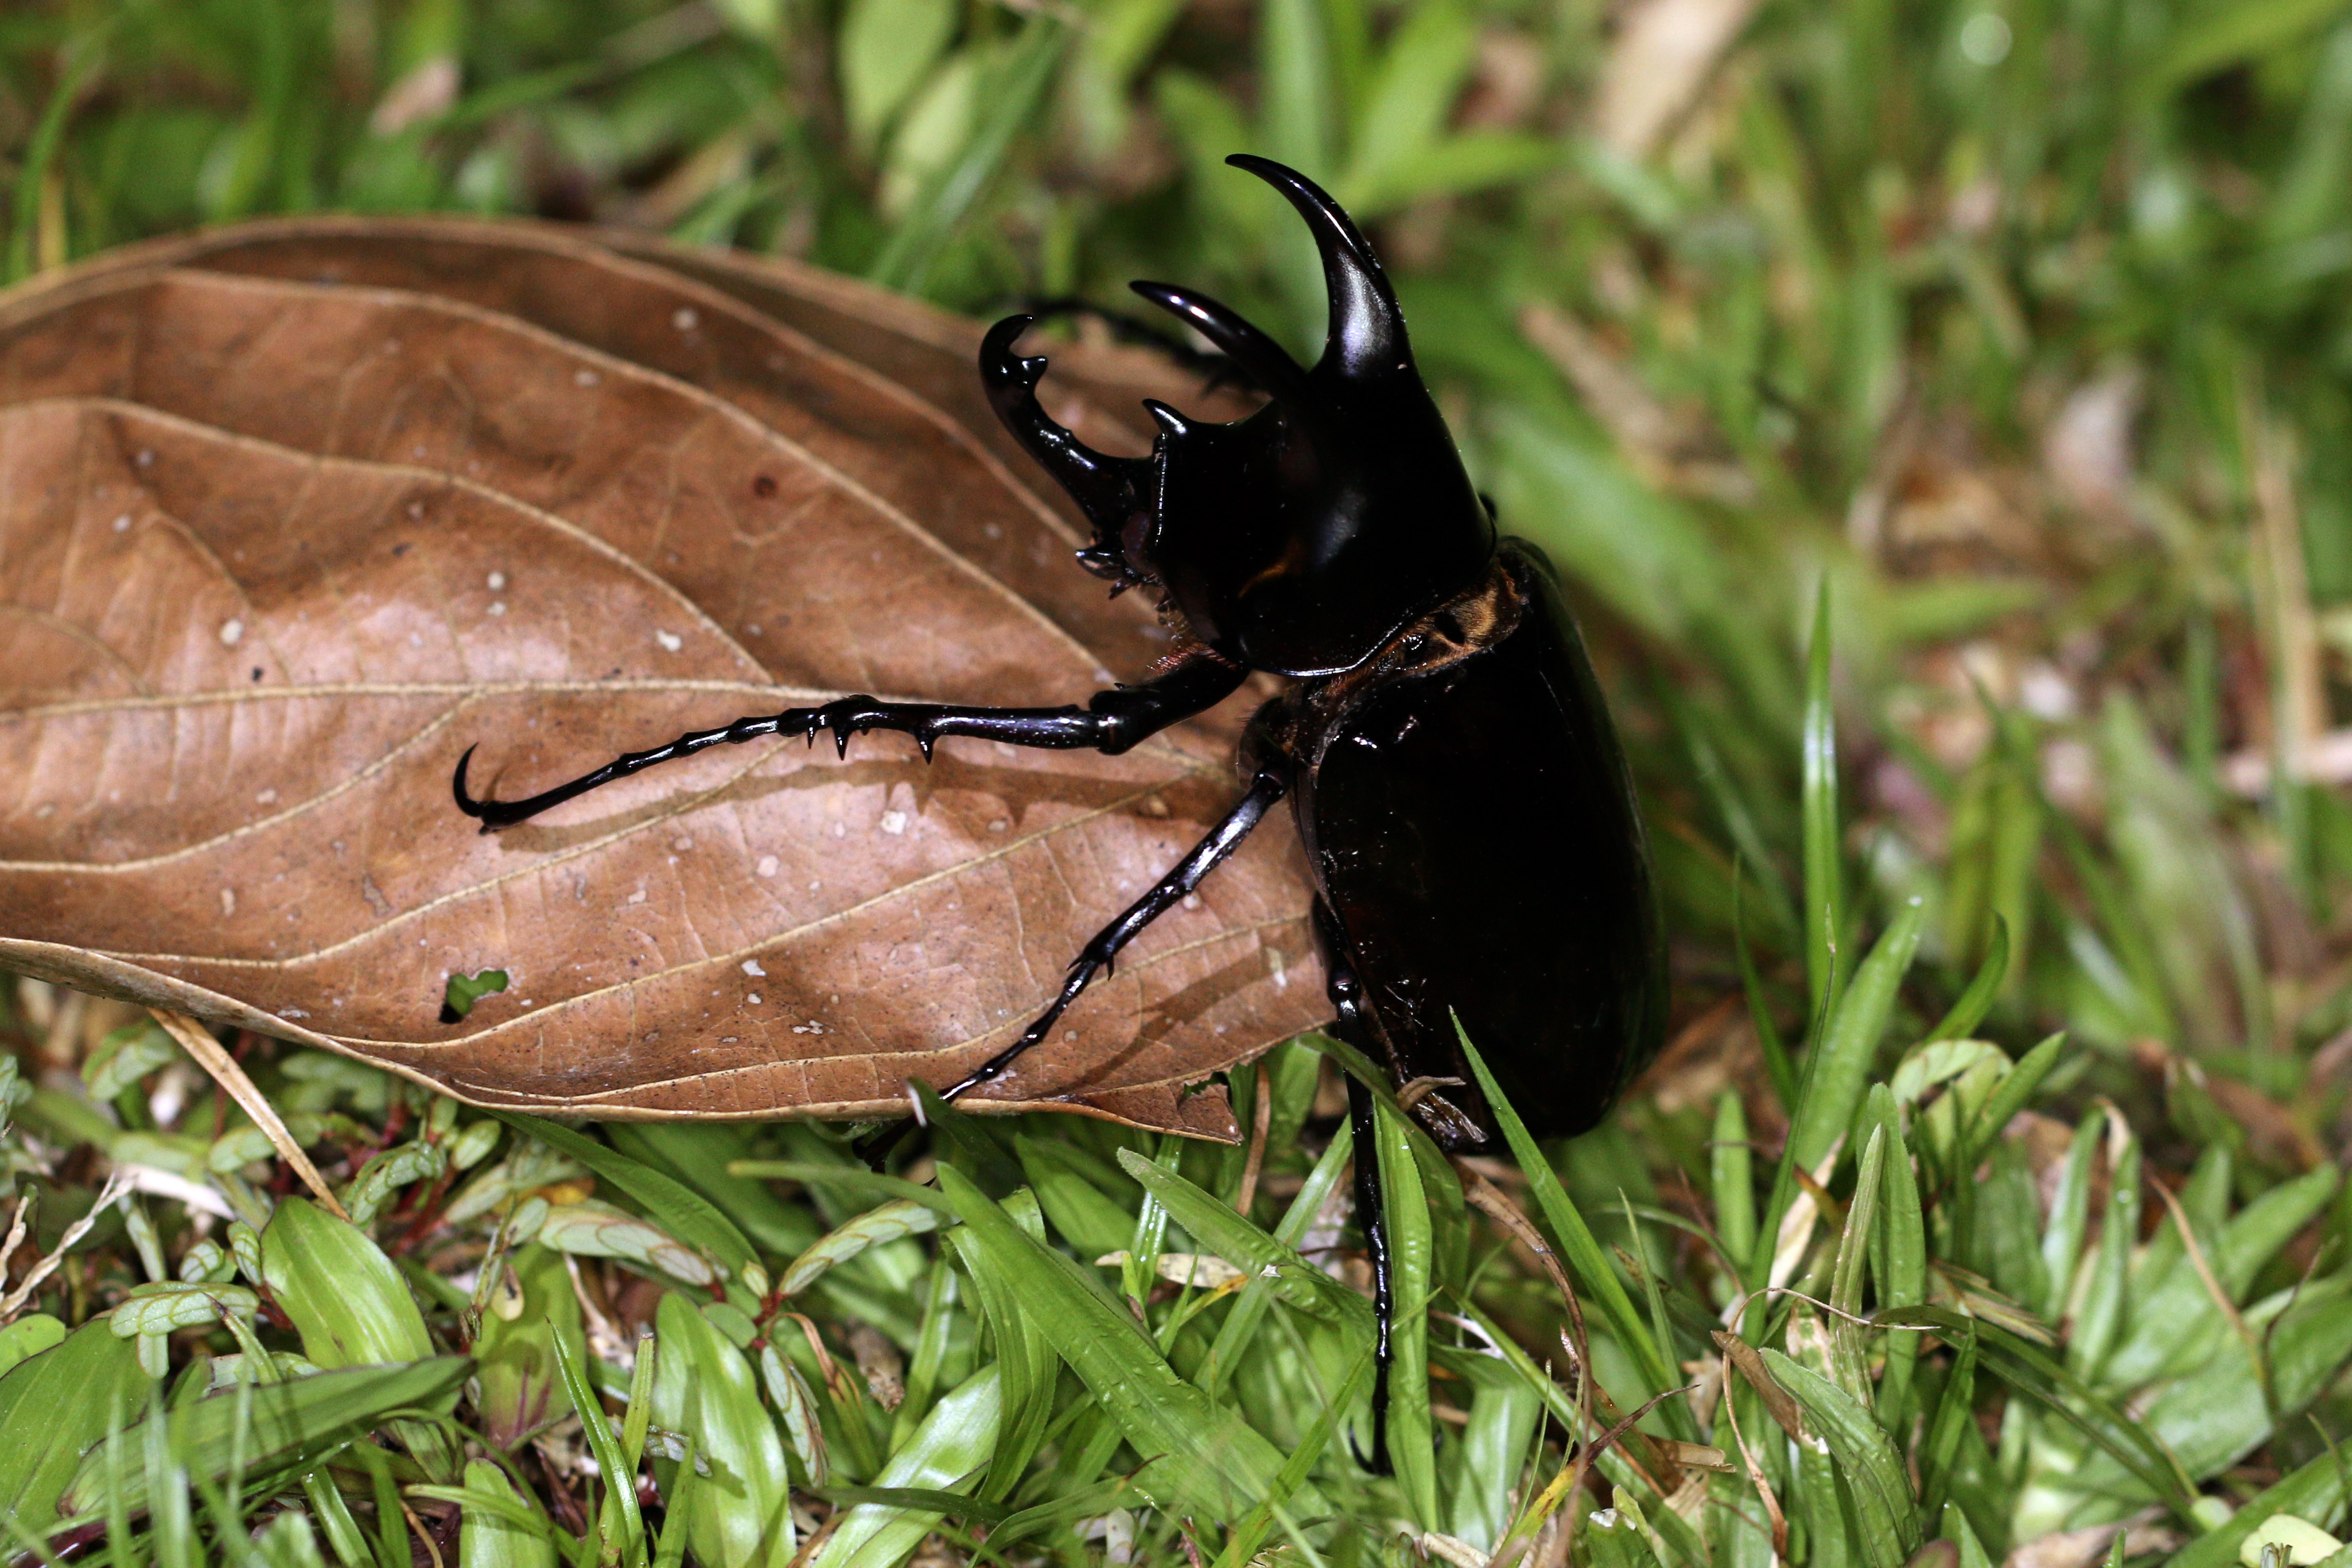 Three-horned rhinoceros beetle (Chalcosoma moellenkampi) male